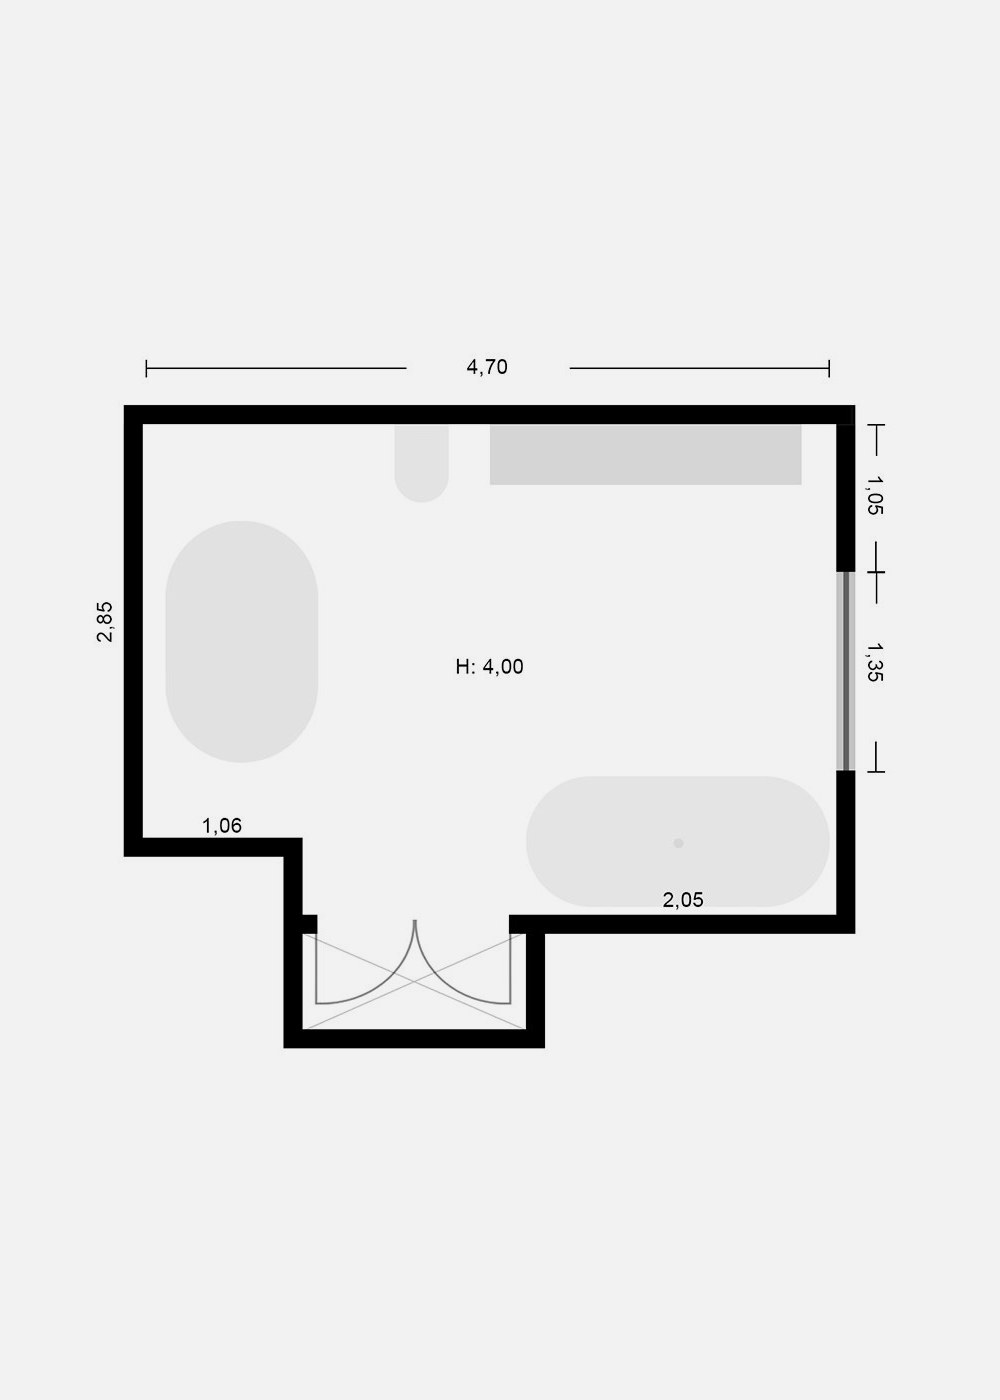 Location_24_Floorplan1